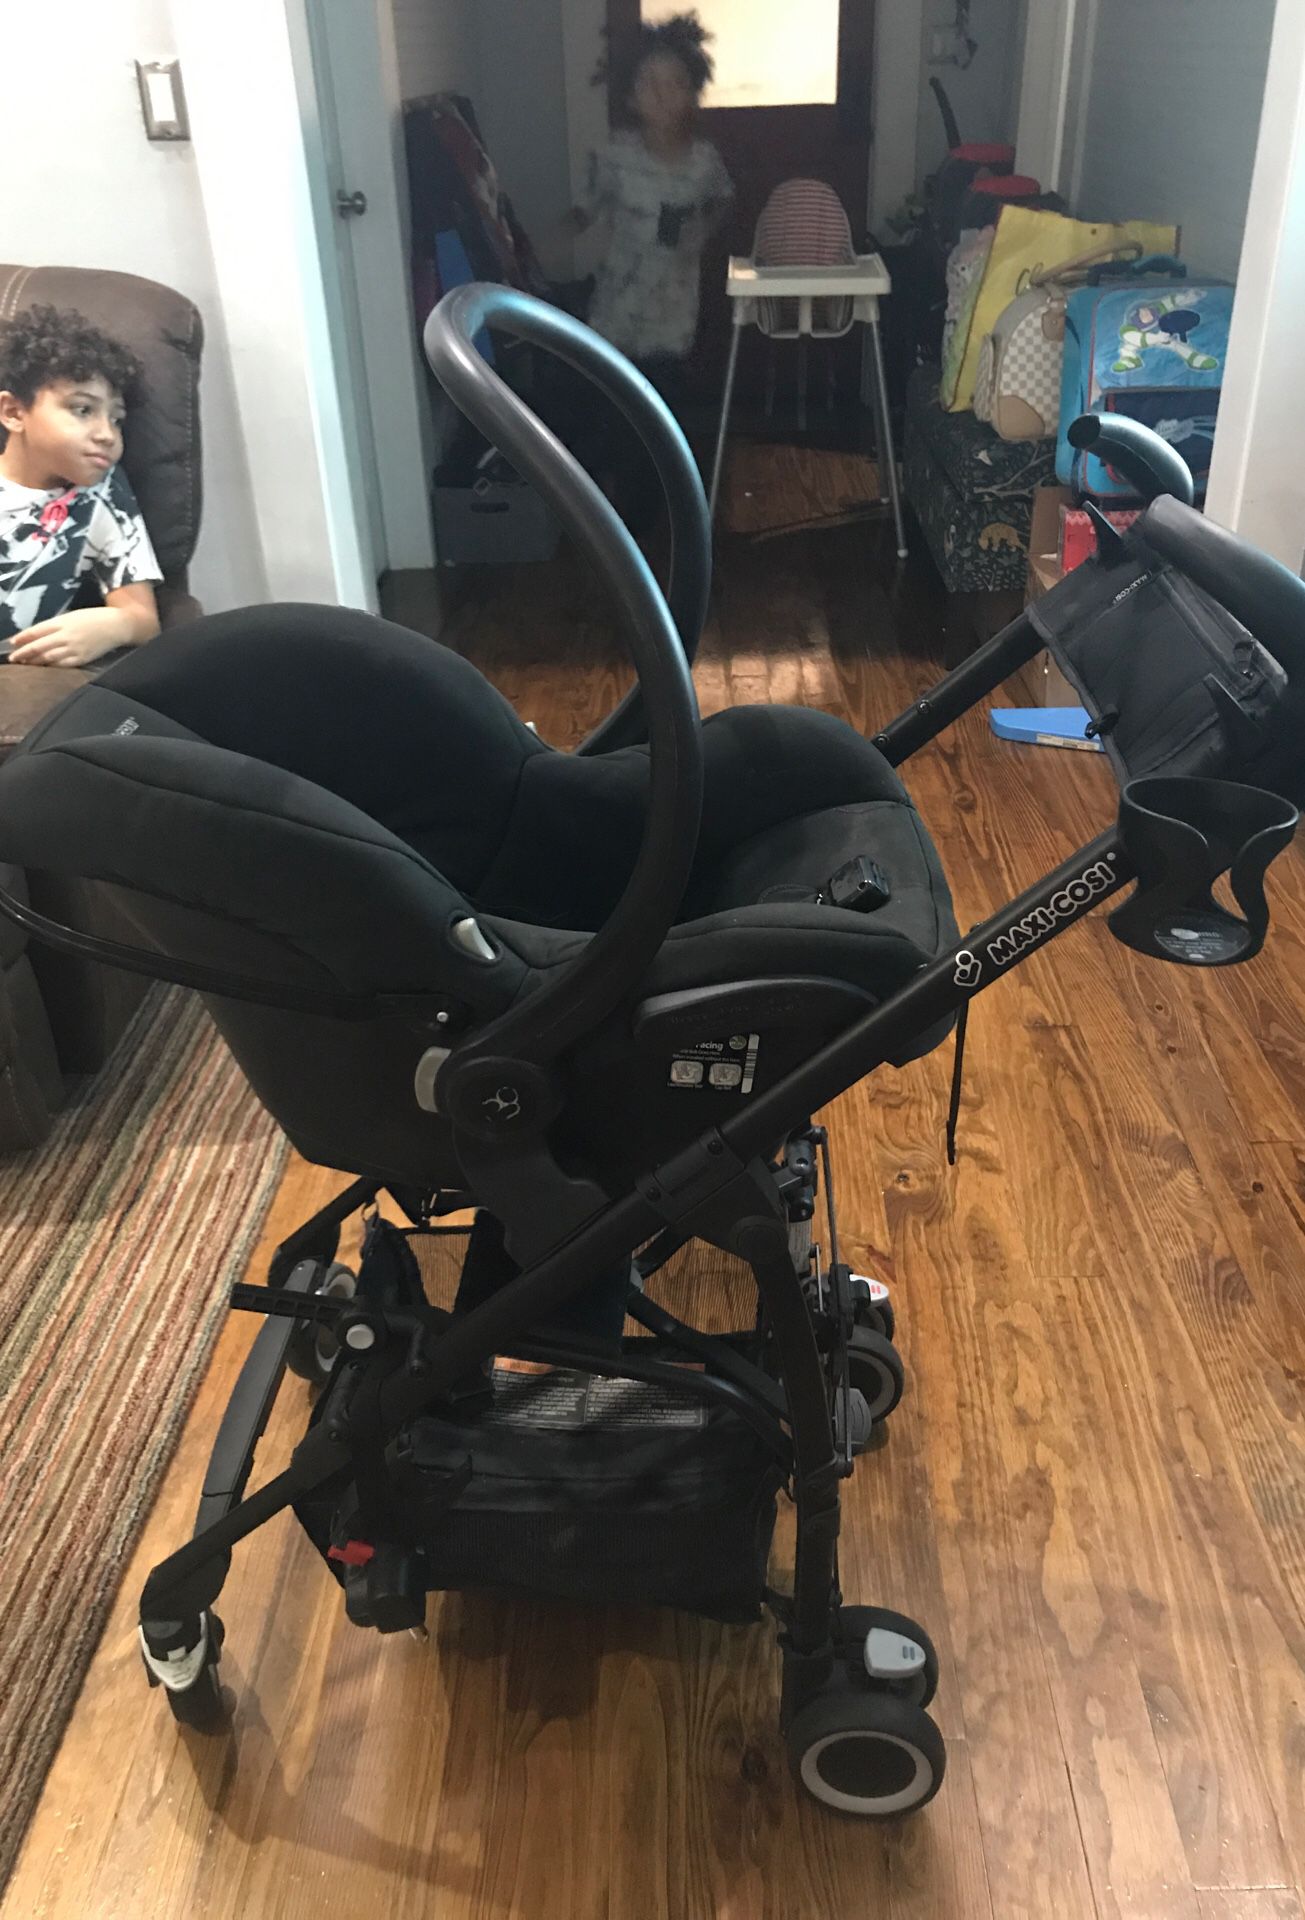 Maxi cosi stroller and car seat